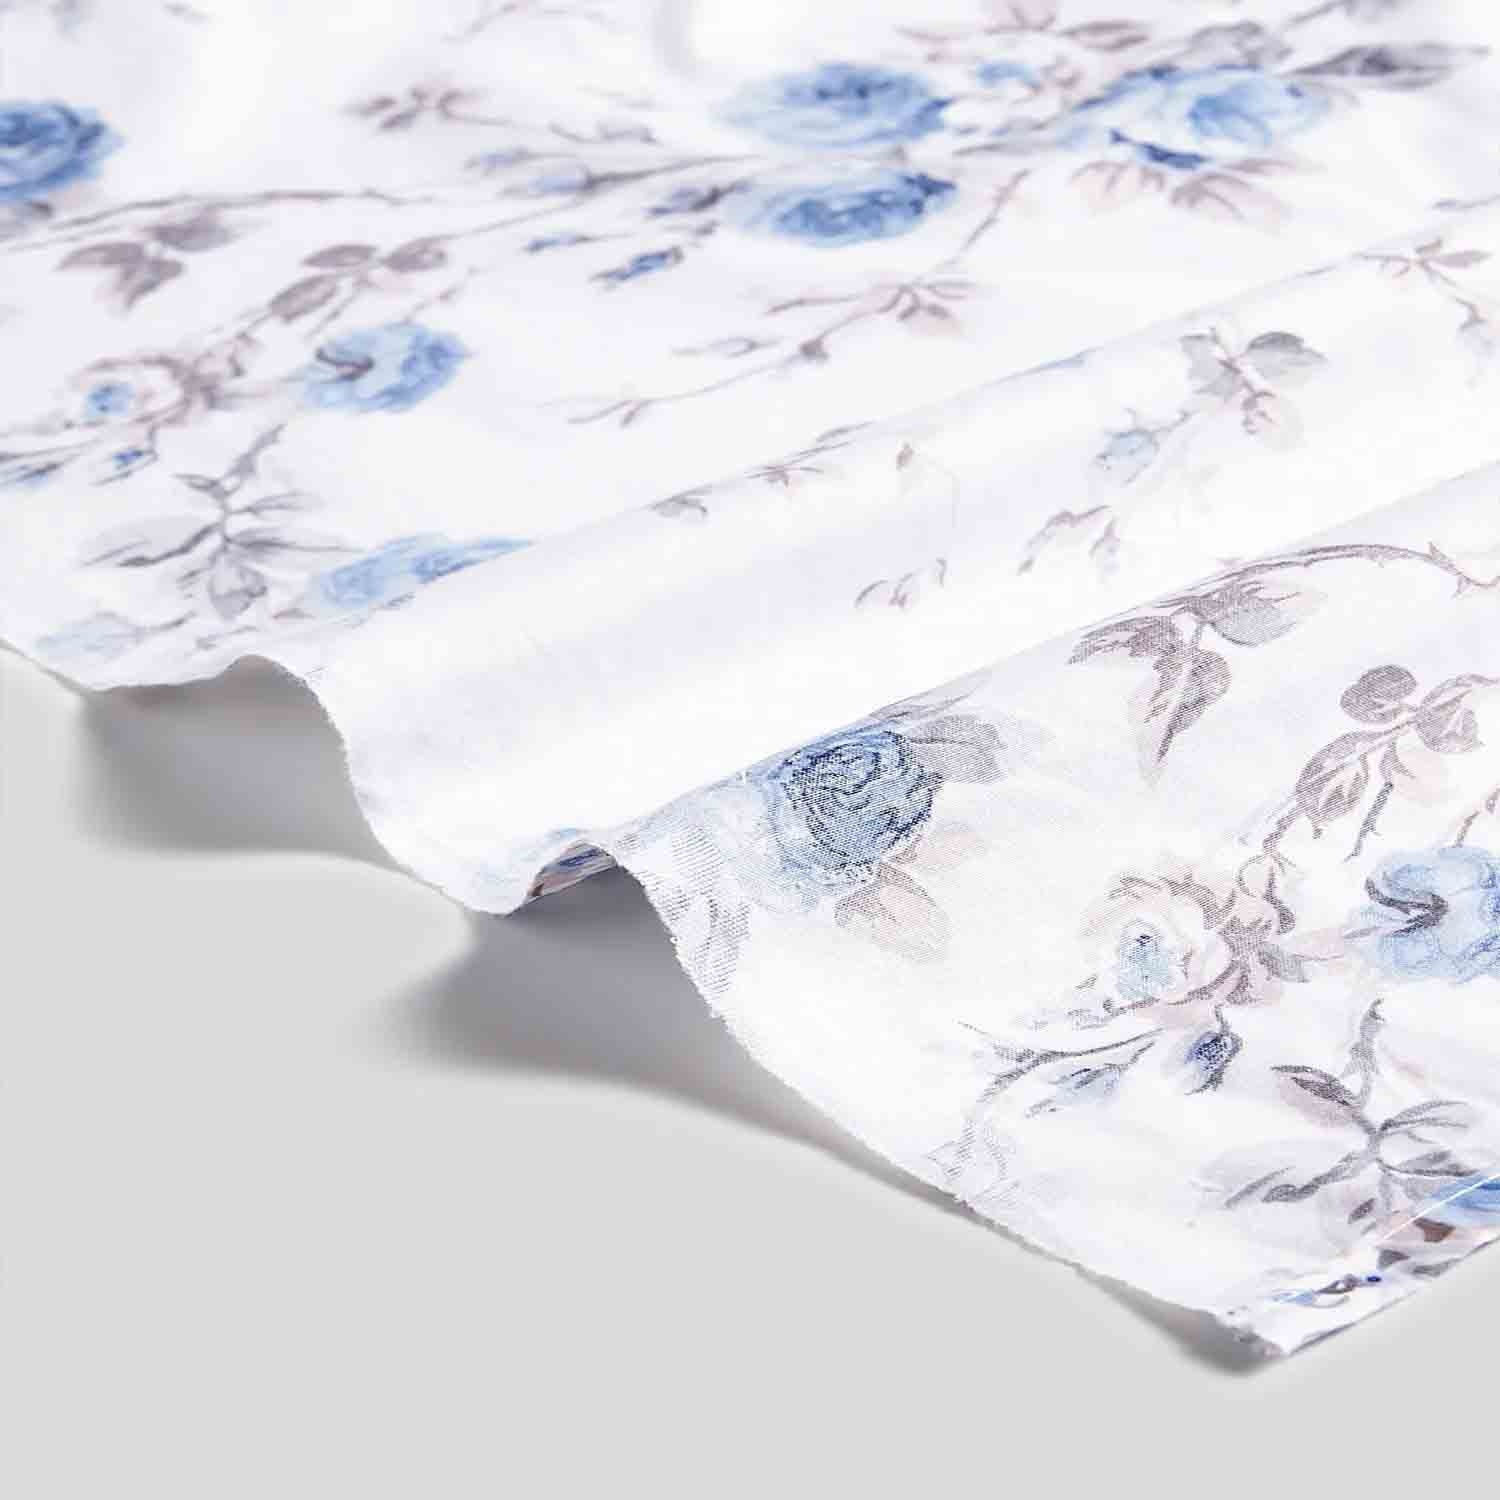 Rishahome 3-Piece Printed 180 Tc Cotton Bedsheet Set Queen Size, Premium Collection (1 Bedsheet + 2 Pillow Cases) Conch